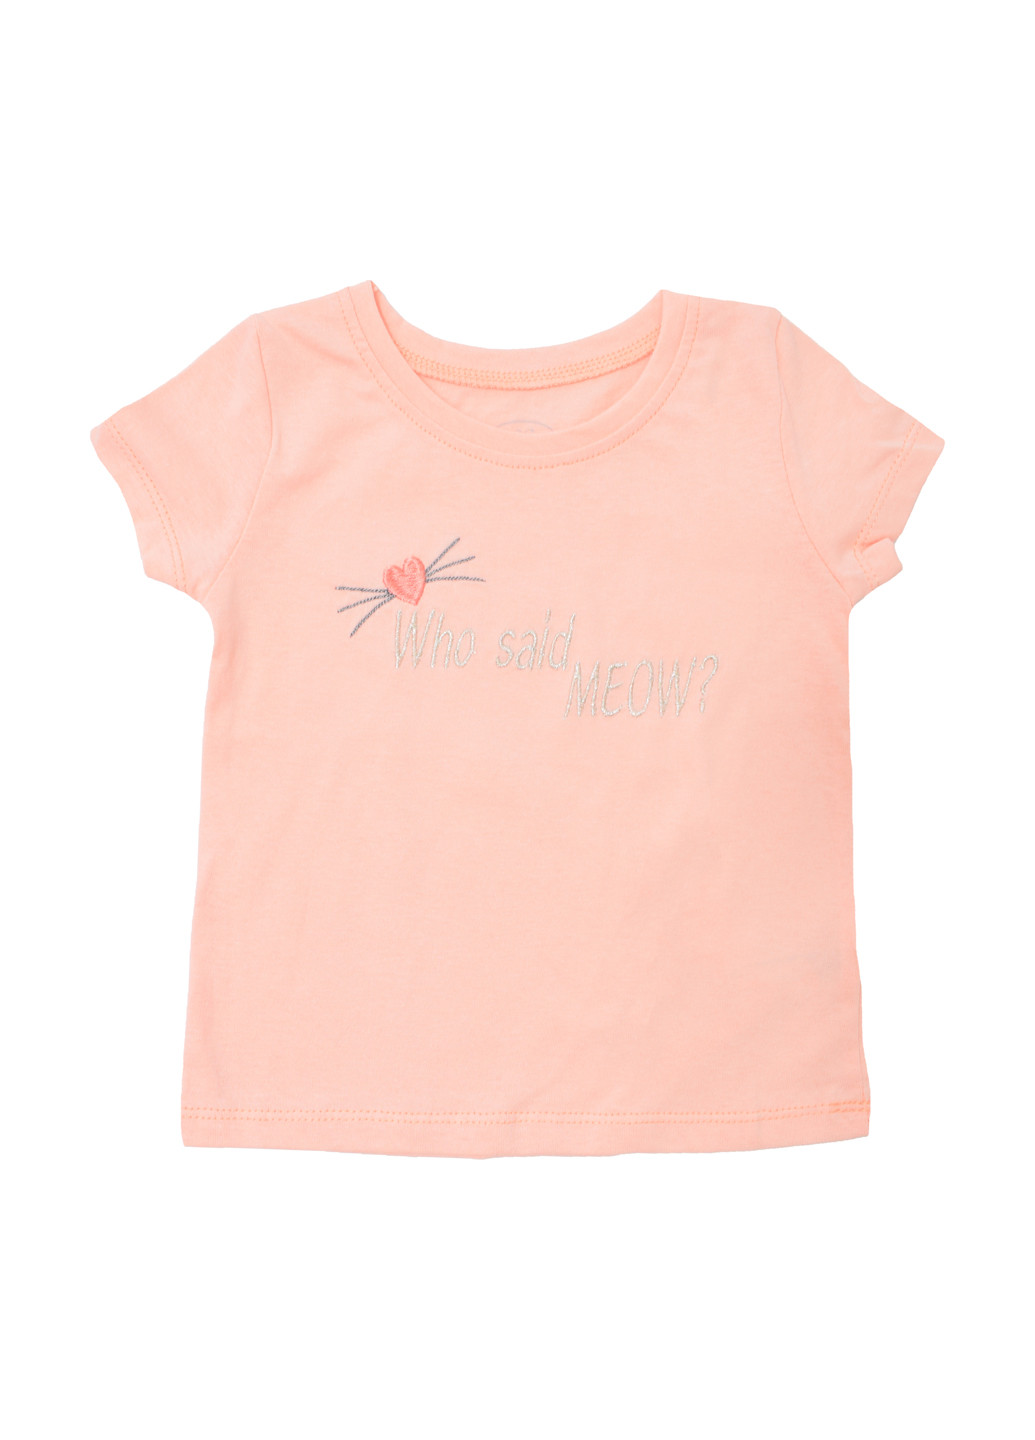 Персиковая летняя футболка Фламинго